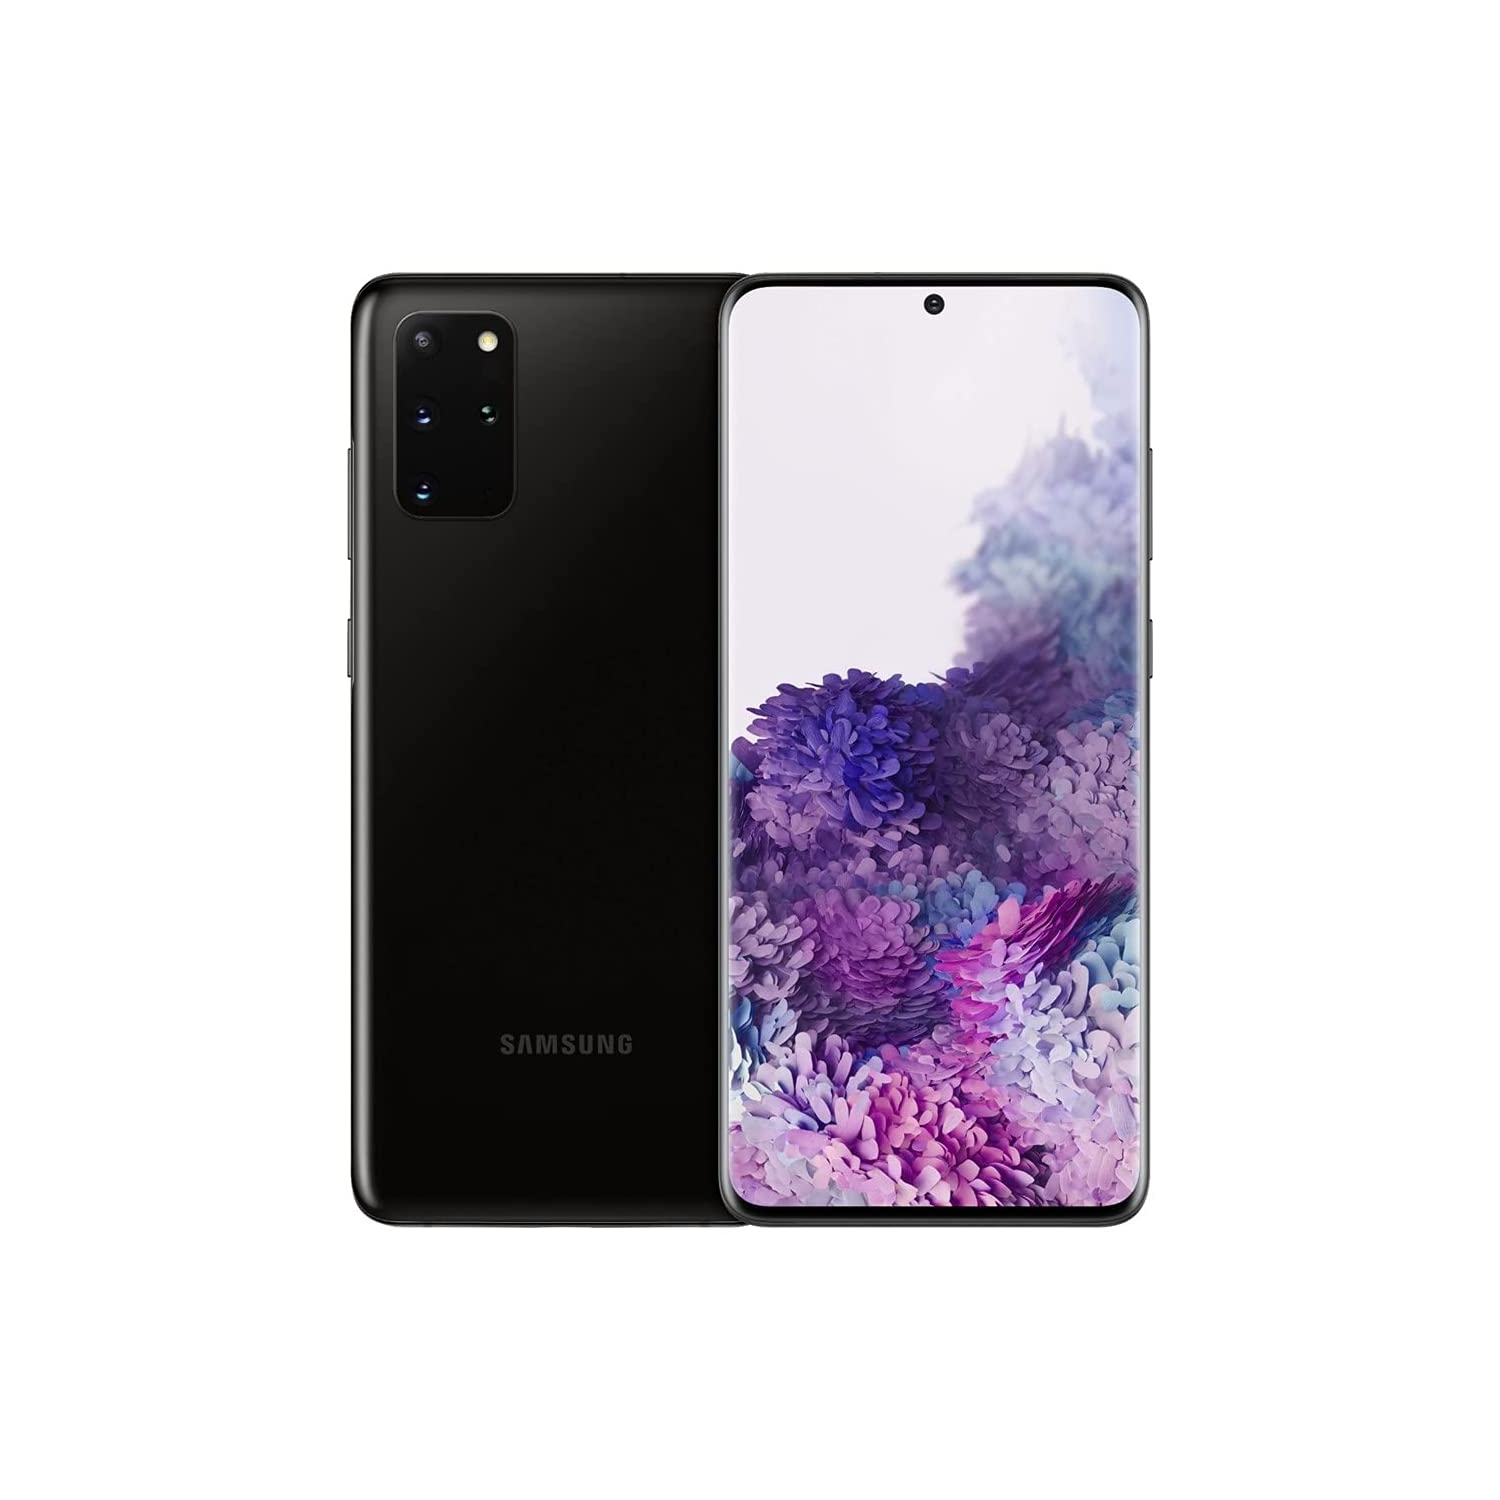 Samsung - Galaxy S20 Plus - 5G- SM-G986U - 128GB + 8GB - 6.7" Dynamic AMOLED 2X Display - 64MP - Factory Unlocked - Open Box - Cosmic Black - 10/10 Condition